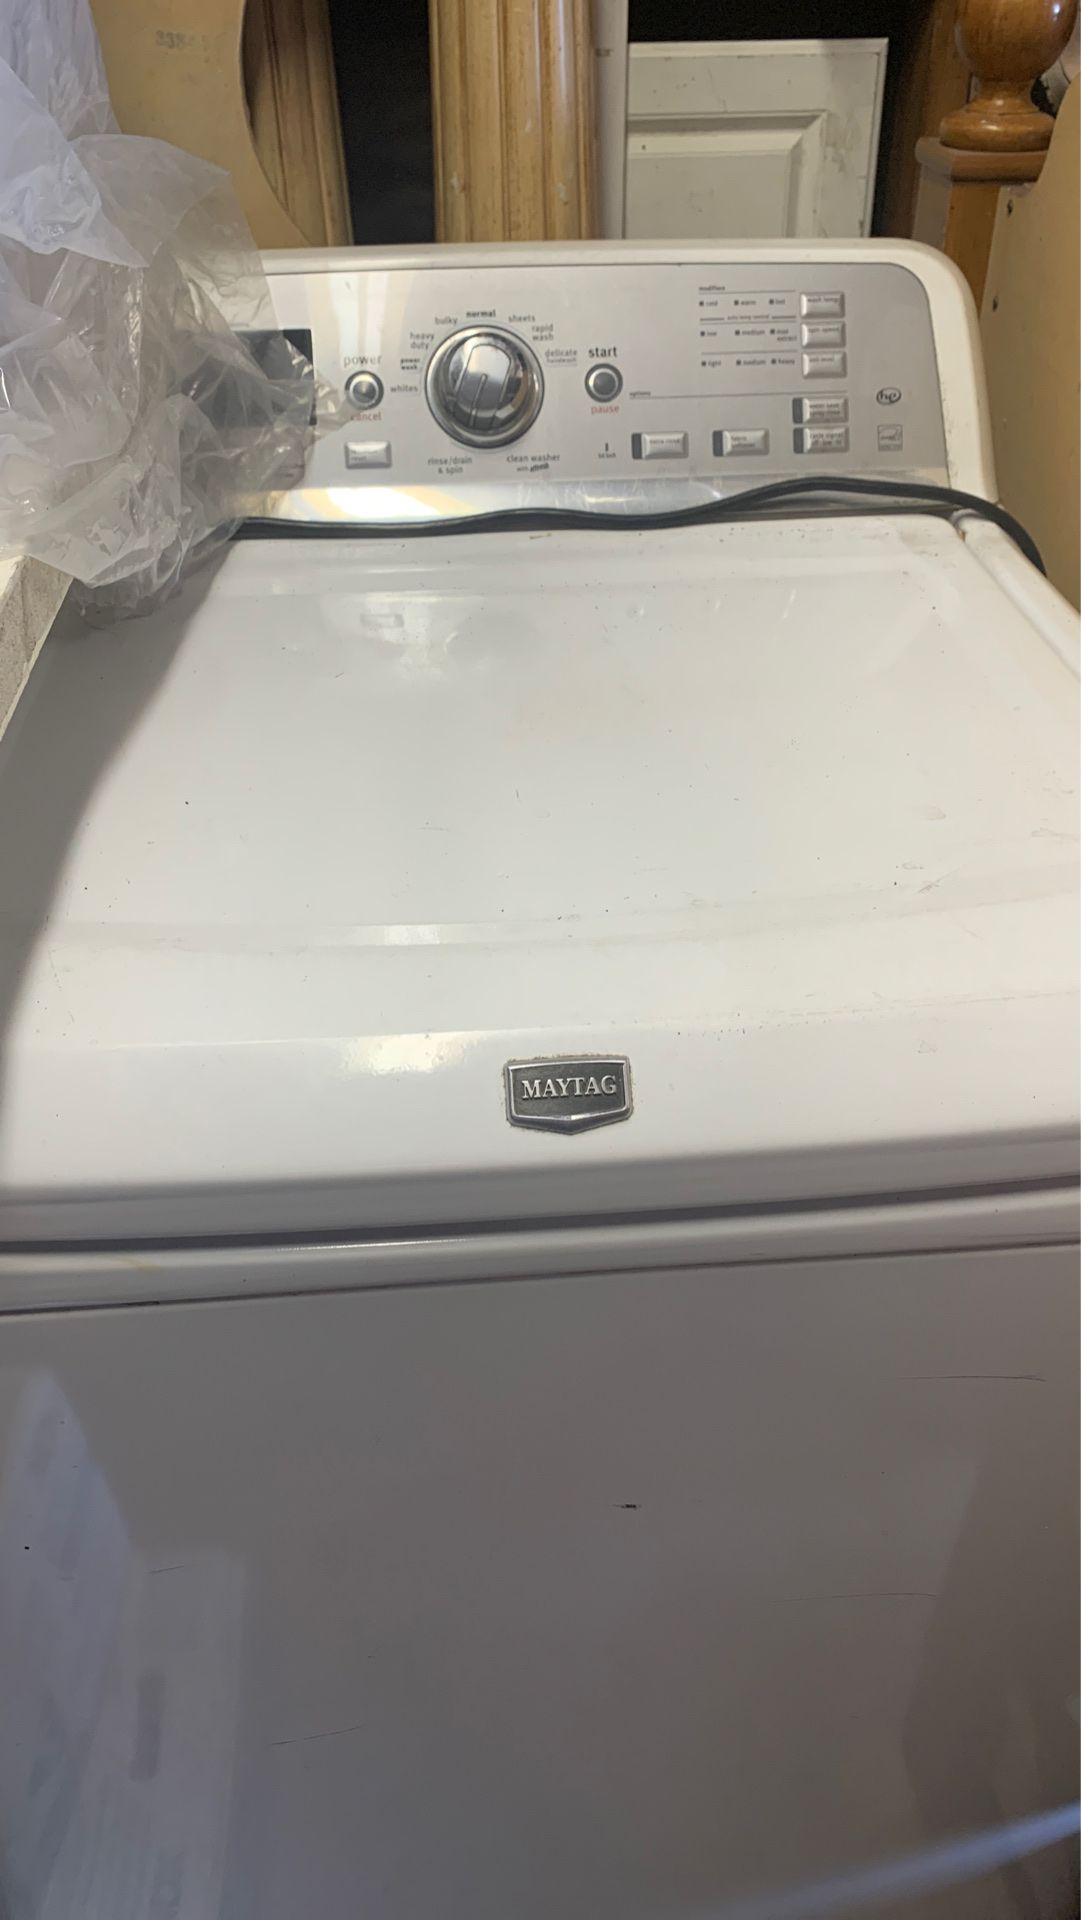 Maytag bravos XL washing machine